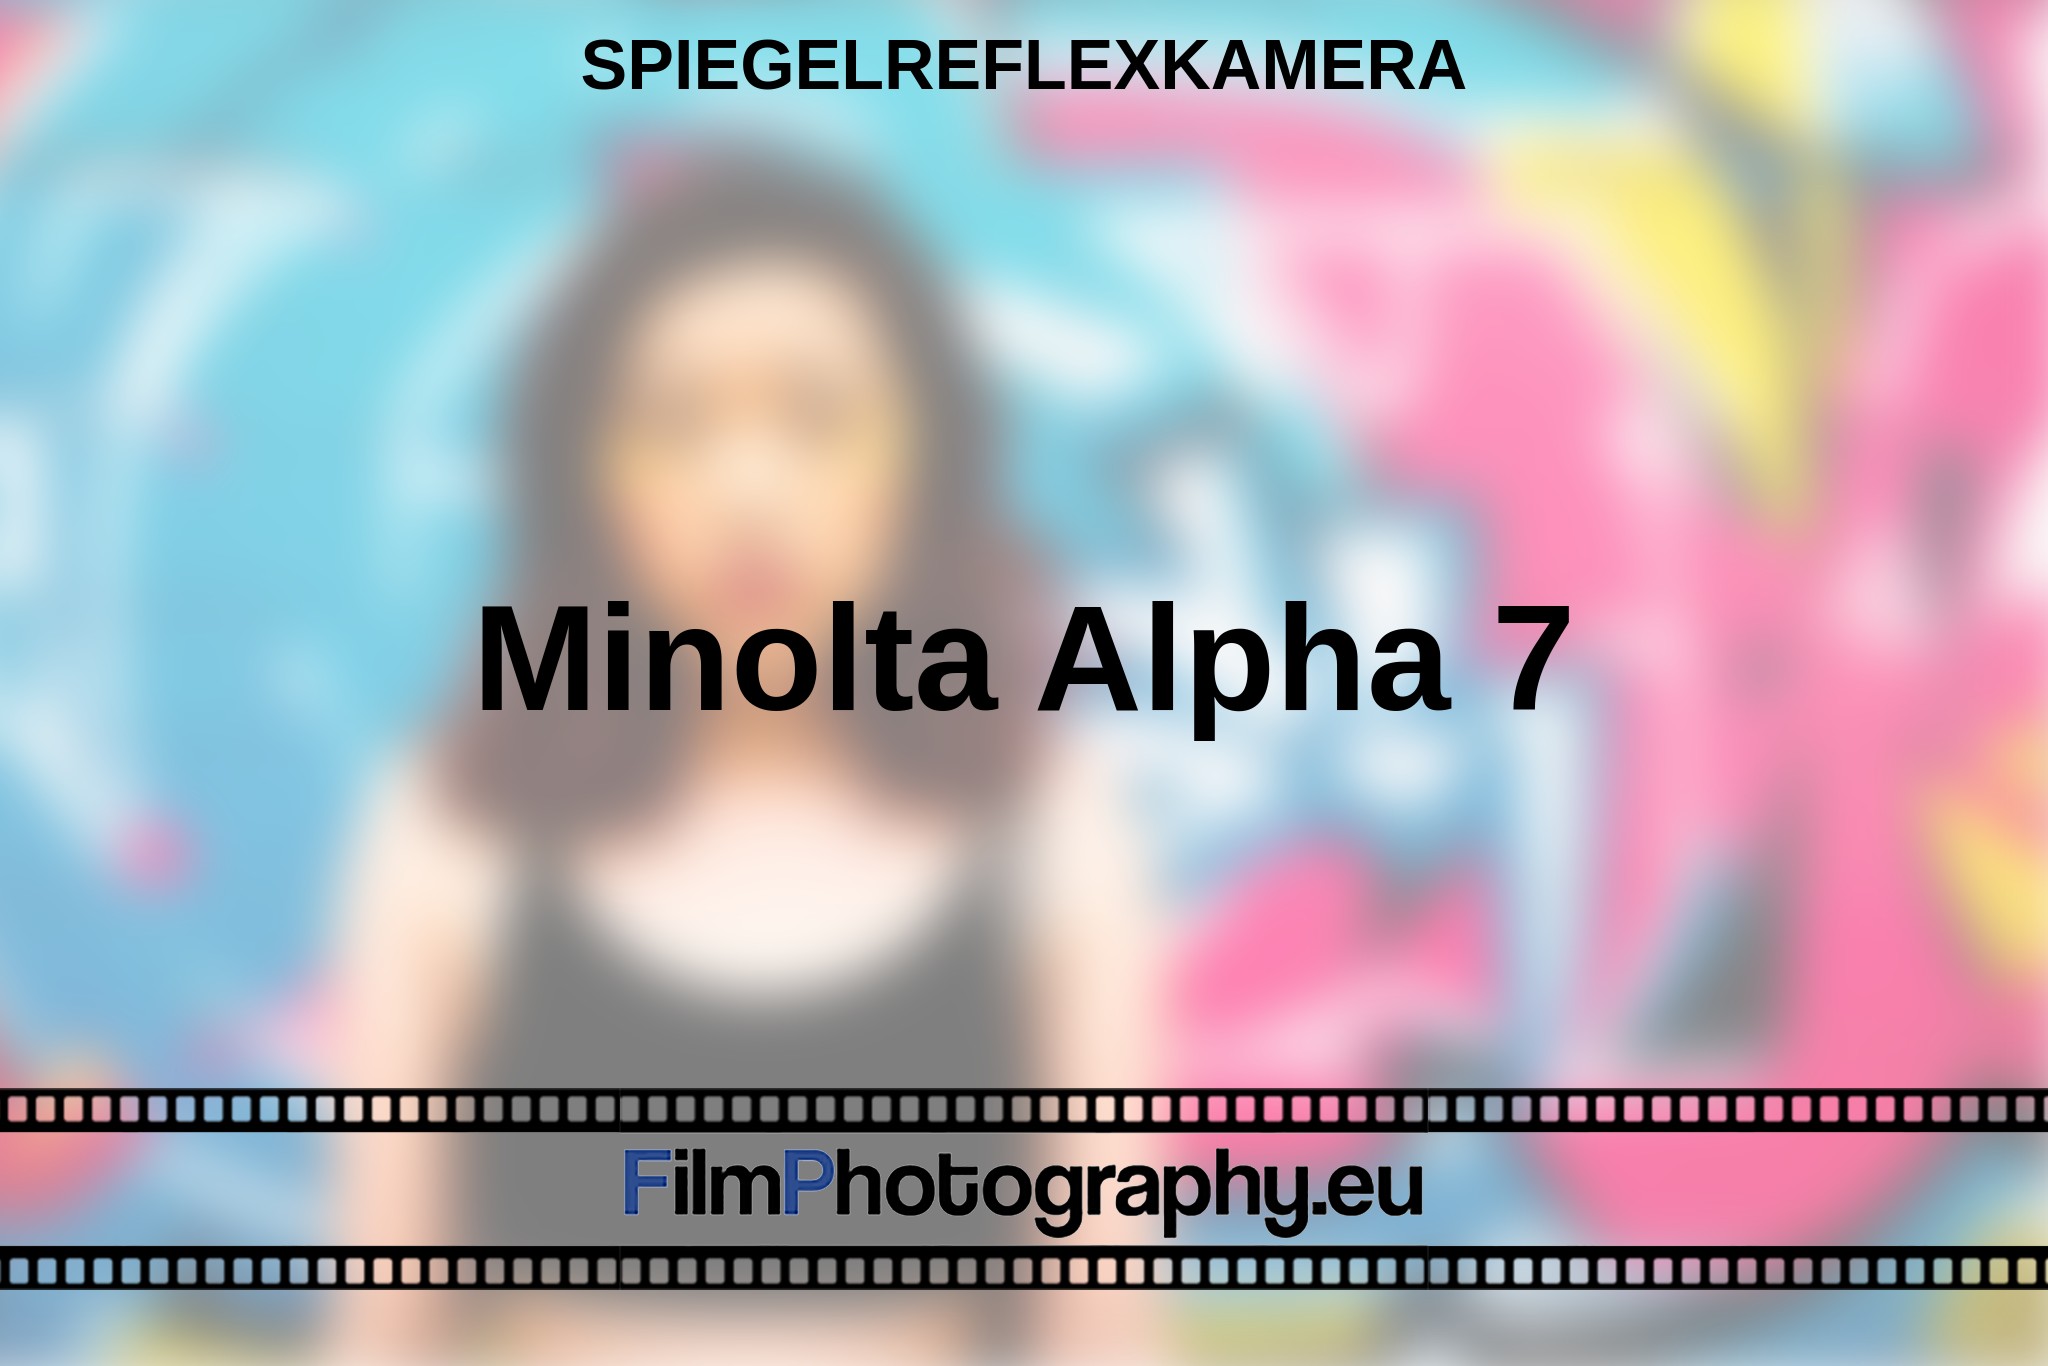 minolta-alpha-7-spiegelreflexkamera-bnv.jpg